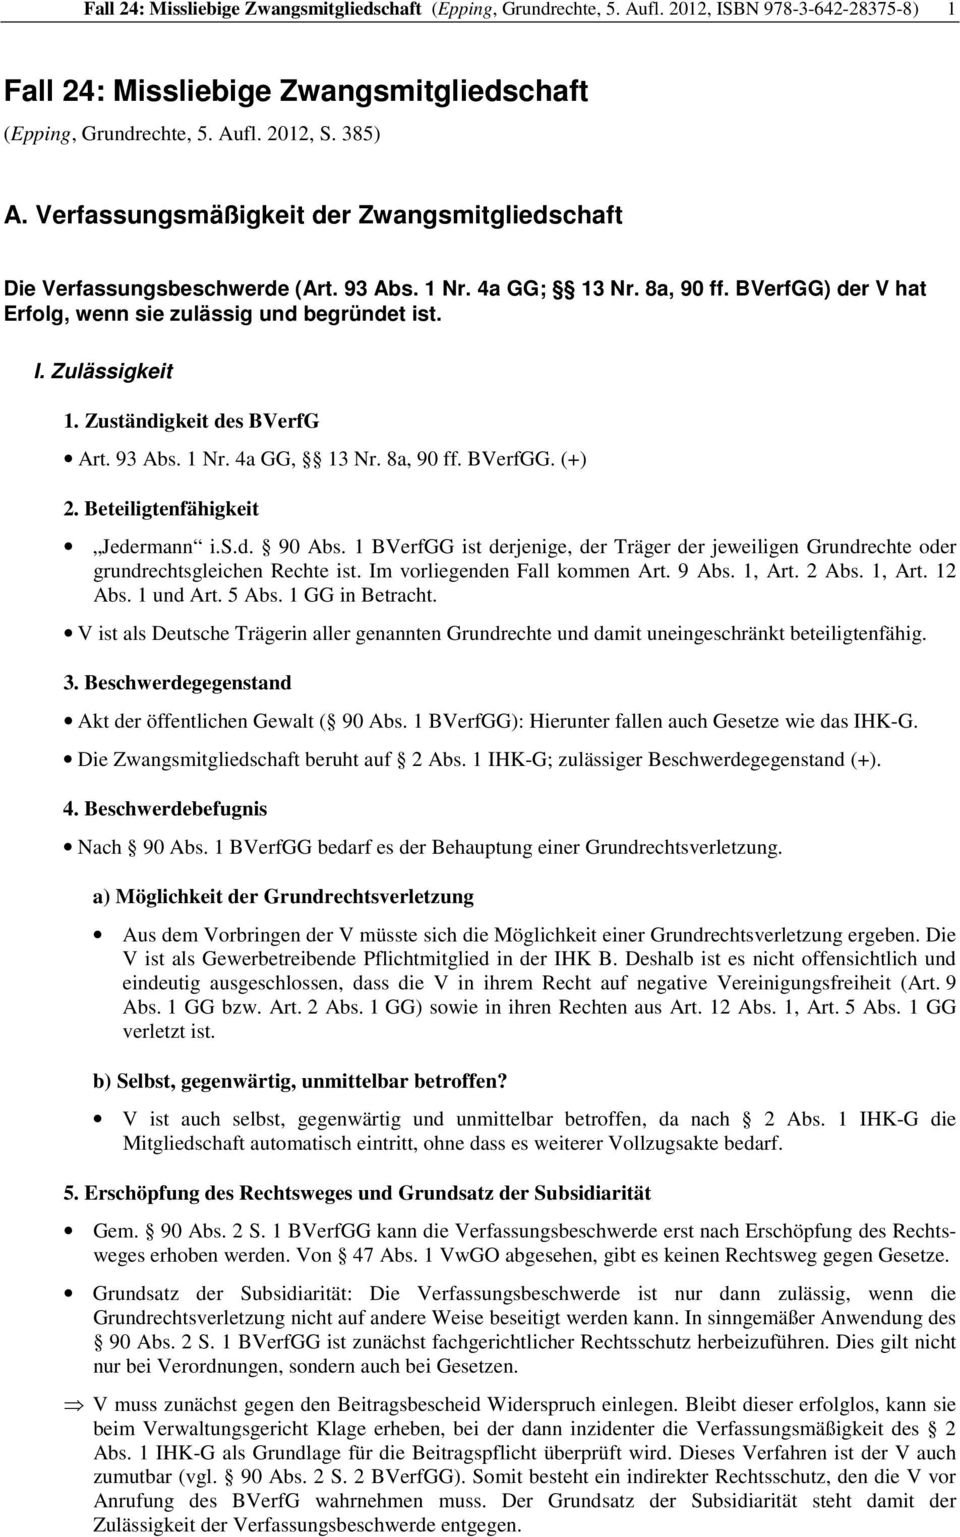 Zuständigkeit des BVerfG Art. 93 Abs. 1 Nr. 4a GG, 13 Nr. 8a, 90 ff. BVerfGG. (+) 2. Beteiligtenfähigkeit Jedermann i.s.d. 90 Abs.